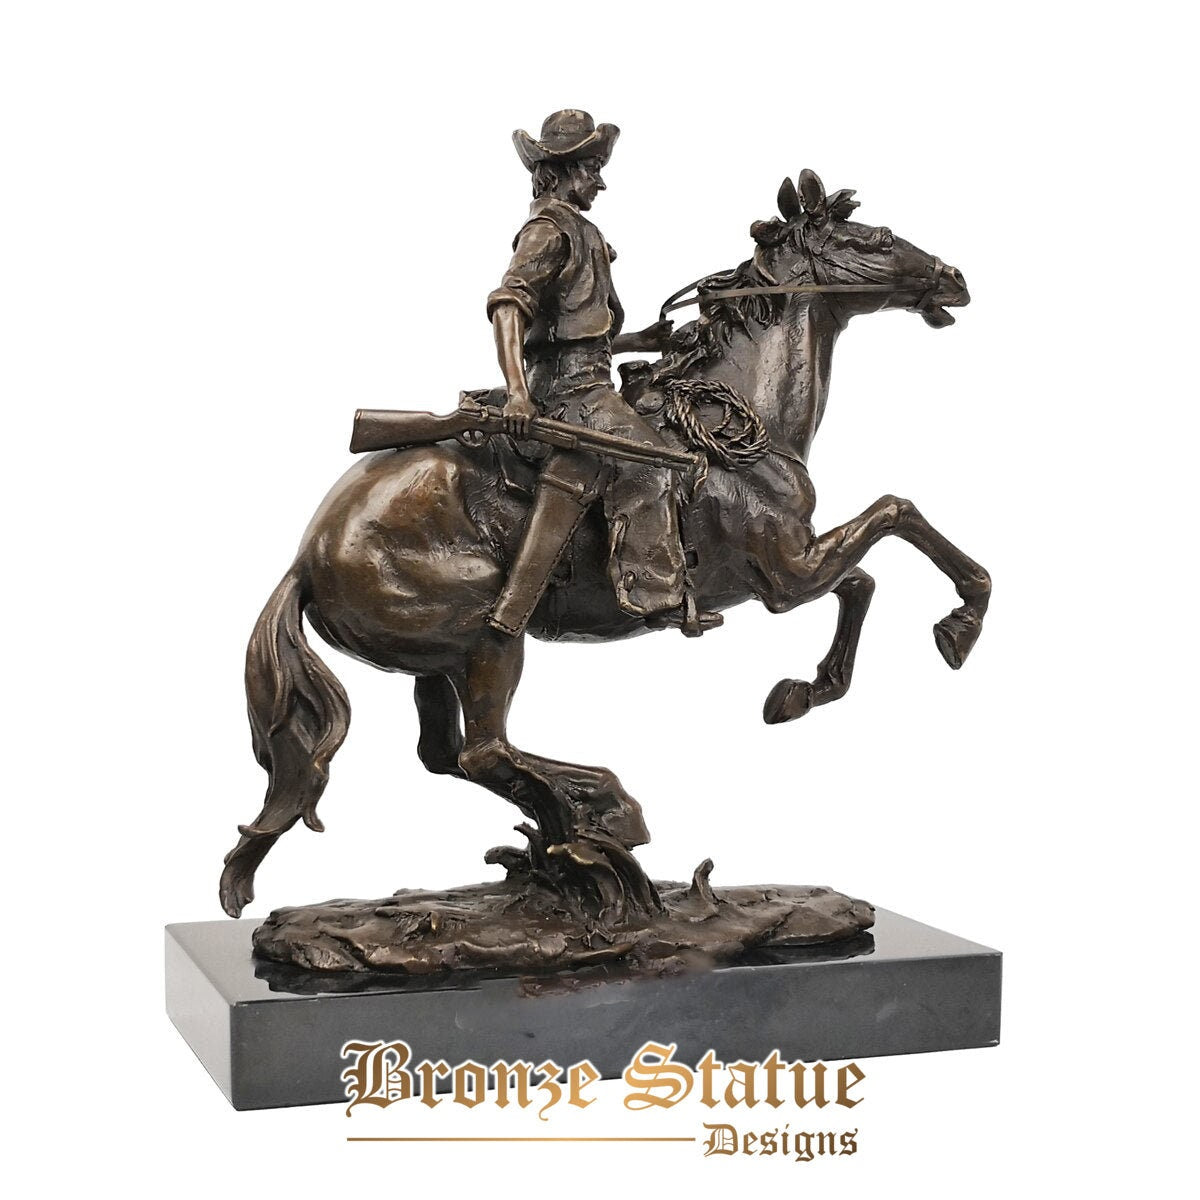 Western cowboy with gun ridding statue vintage man sculpture art marble base gorgeous office table decoration